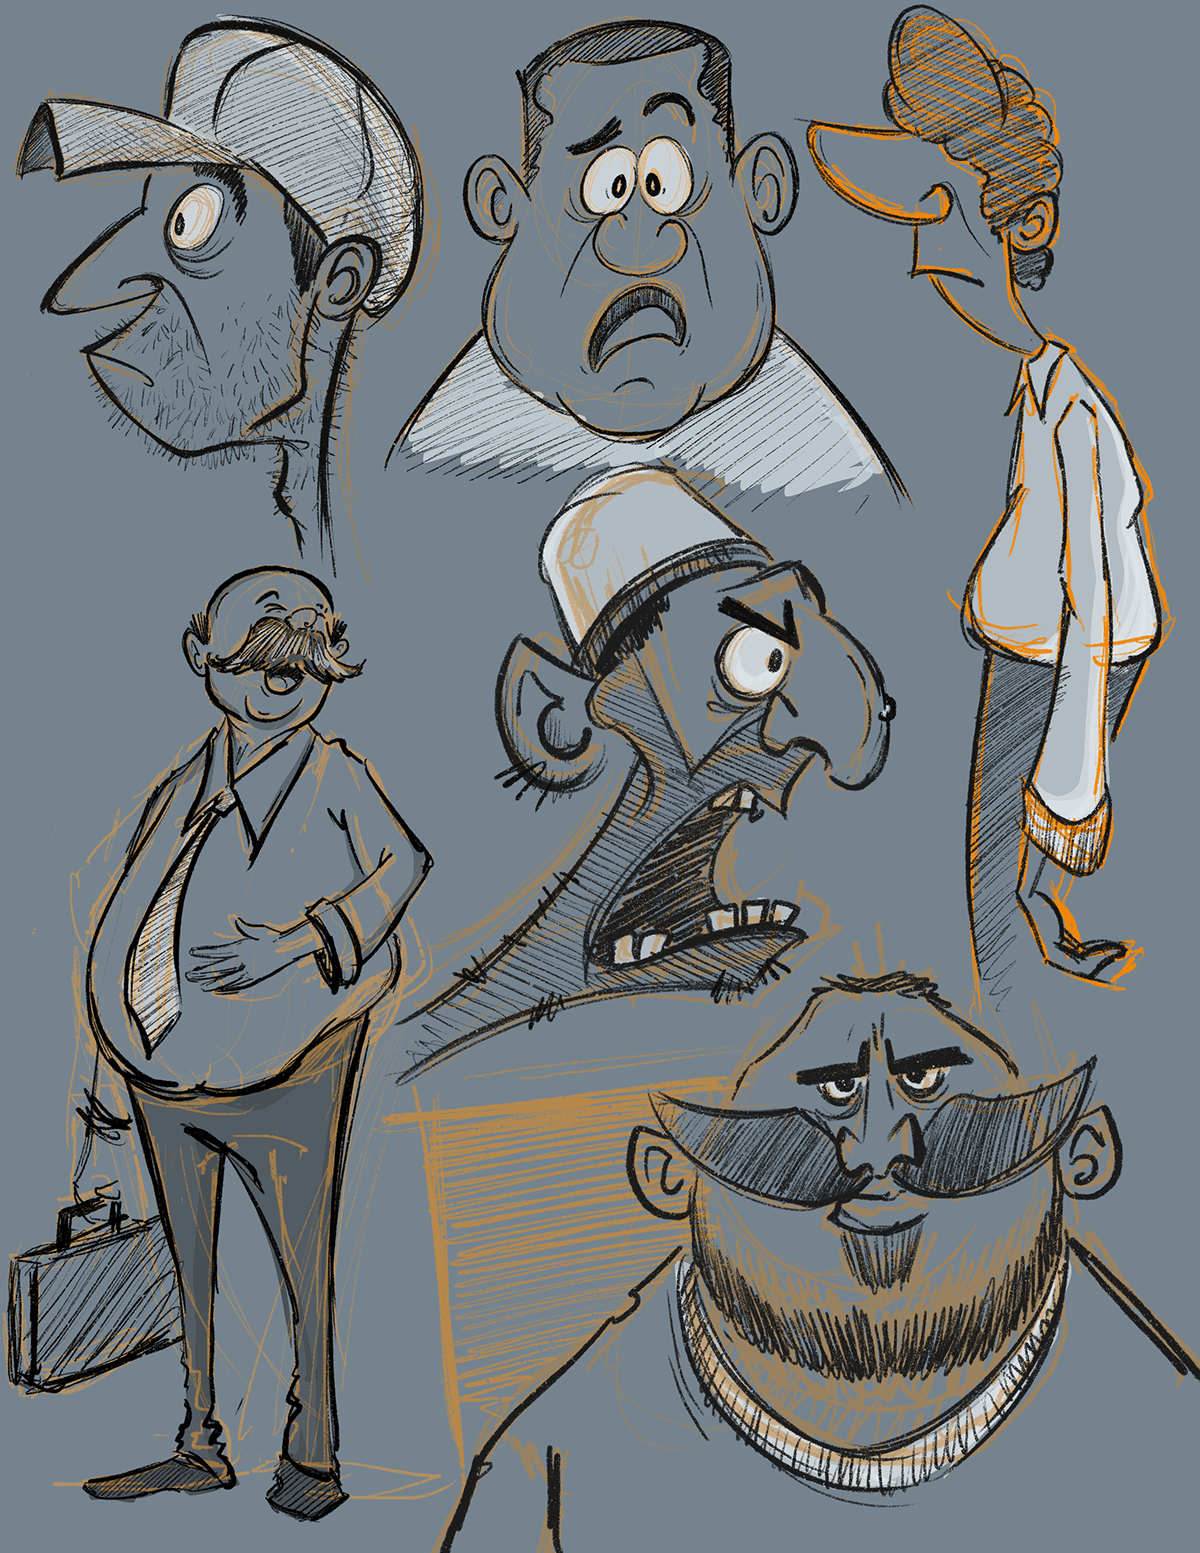 Character design  characterdesign characterdrawing characters dailysketch digital illustration digitalart sketch